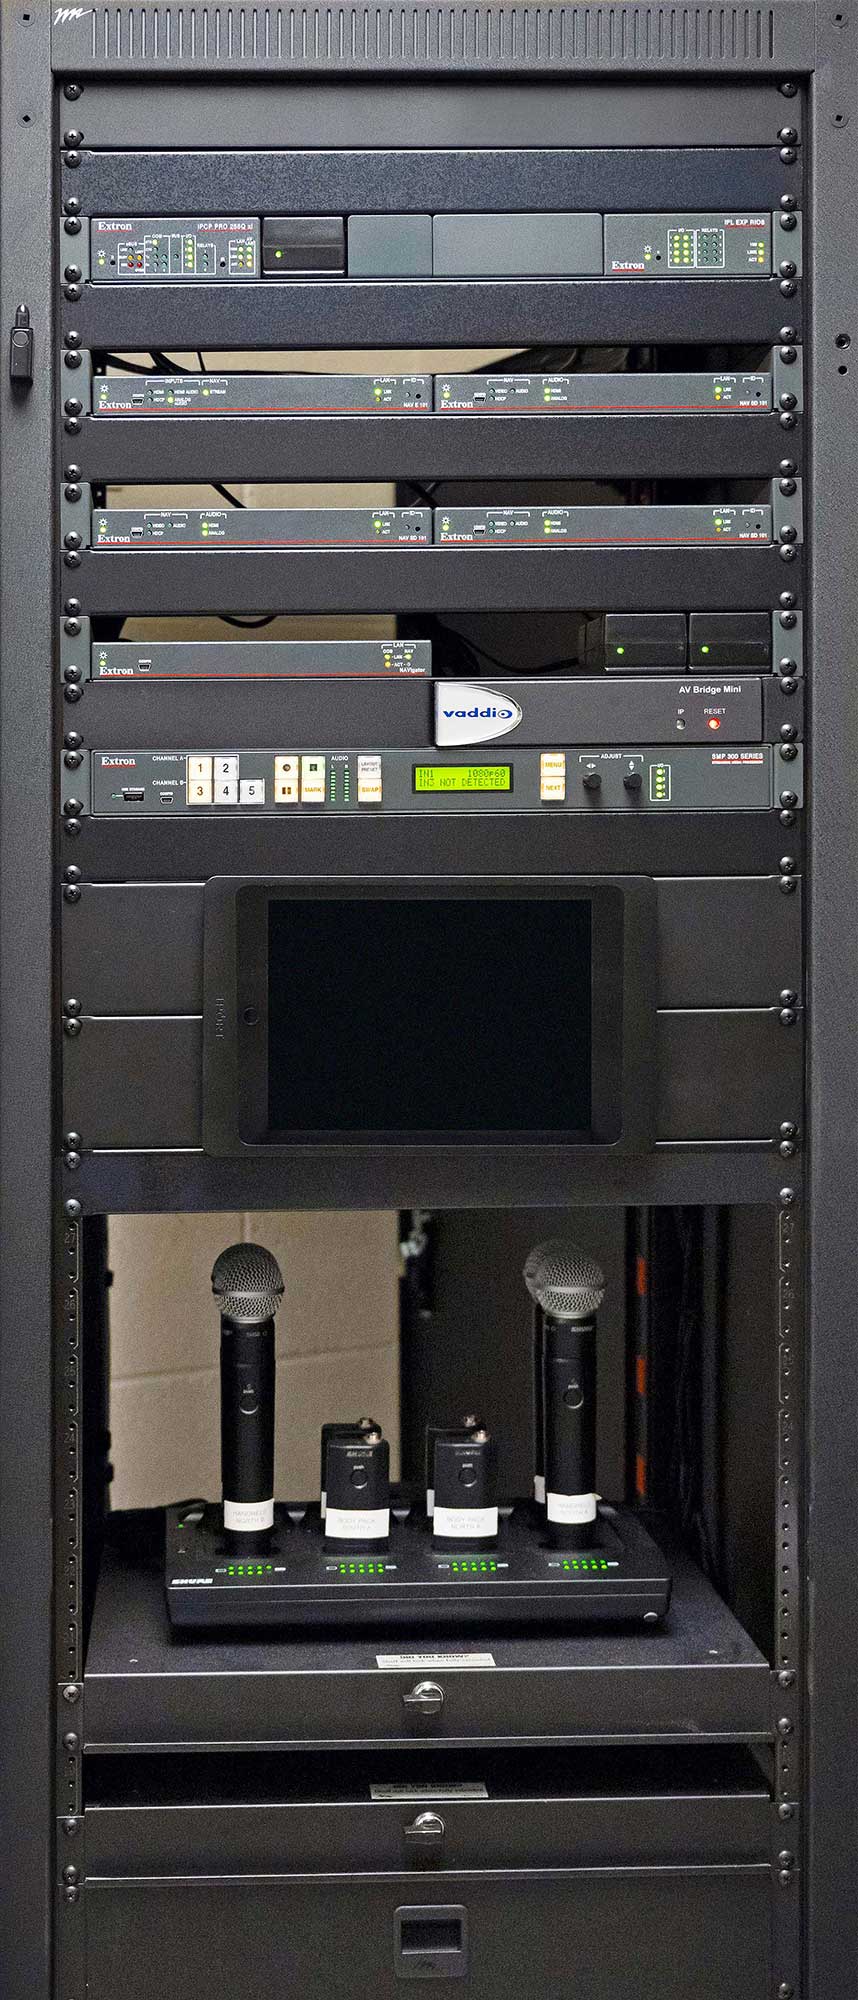 Thumbnail - AV 机柜。从上至下依次为：IPCP Pro 控制处理器、NAV Pro 编码器和解码器、NAVigator 以及 SMP 352 流媒体处理器。iPad 和无线麦克风位于充电座上